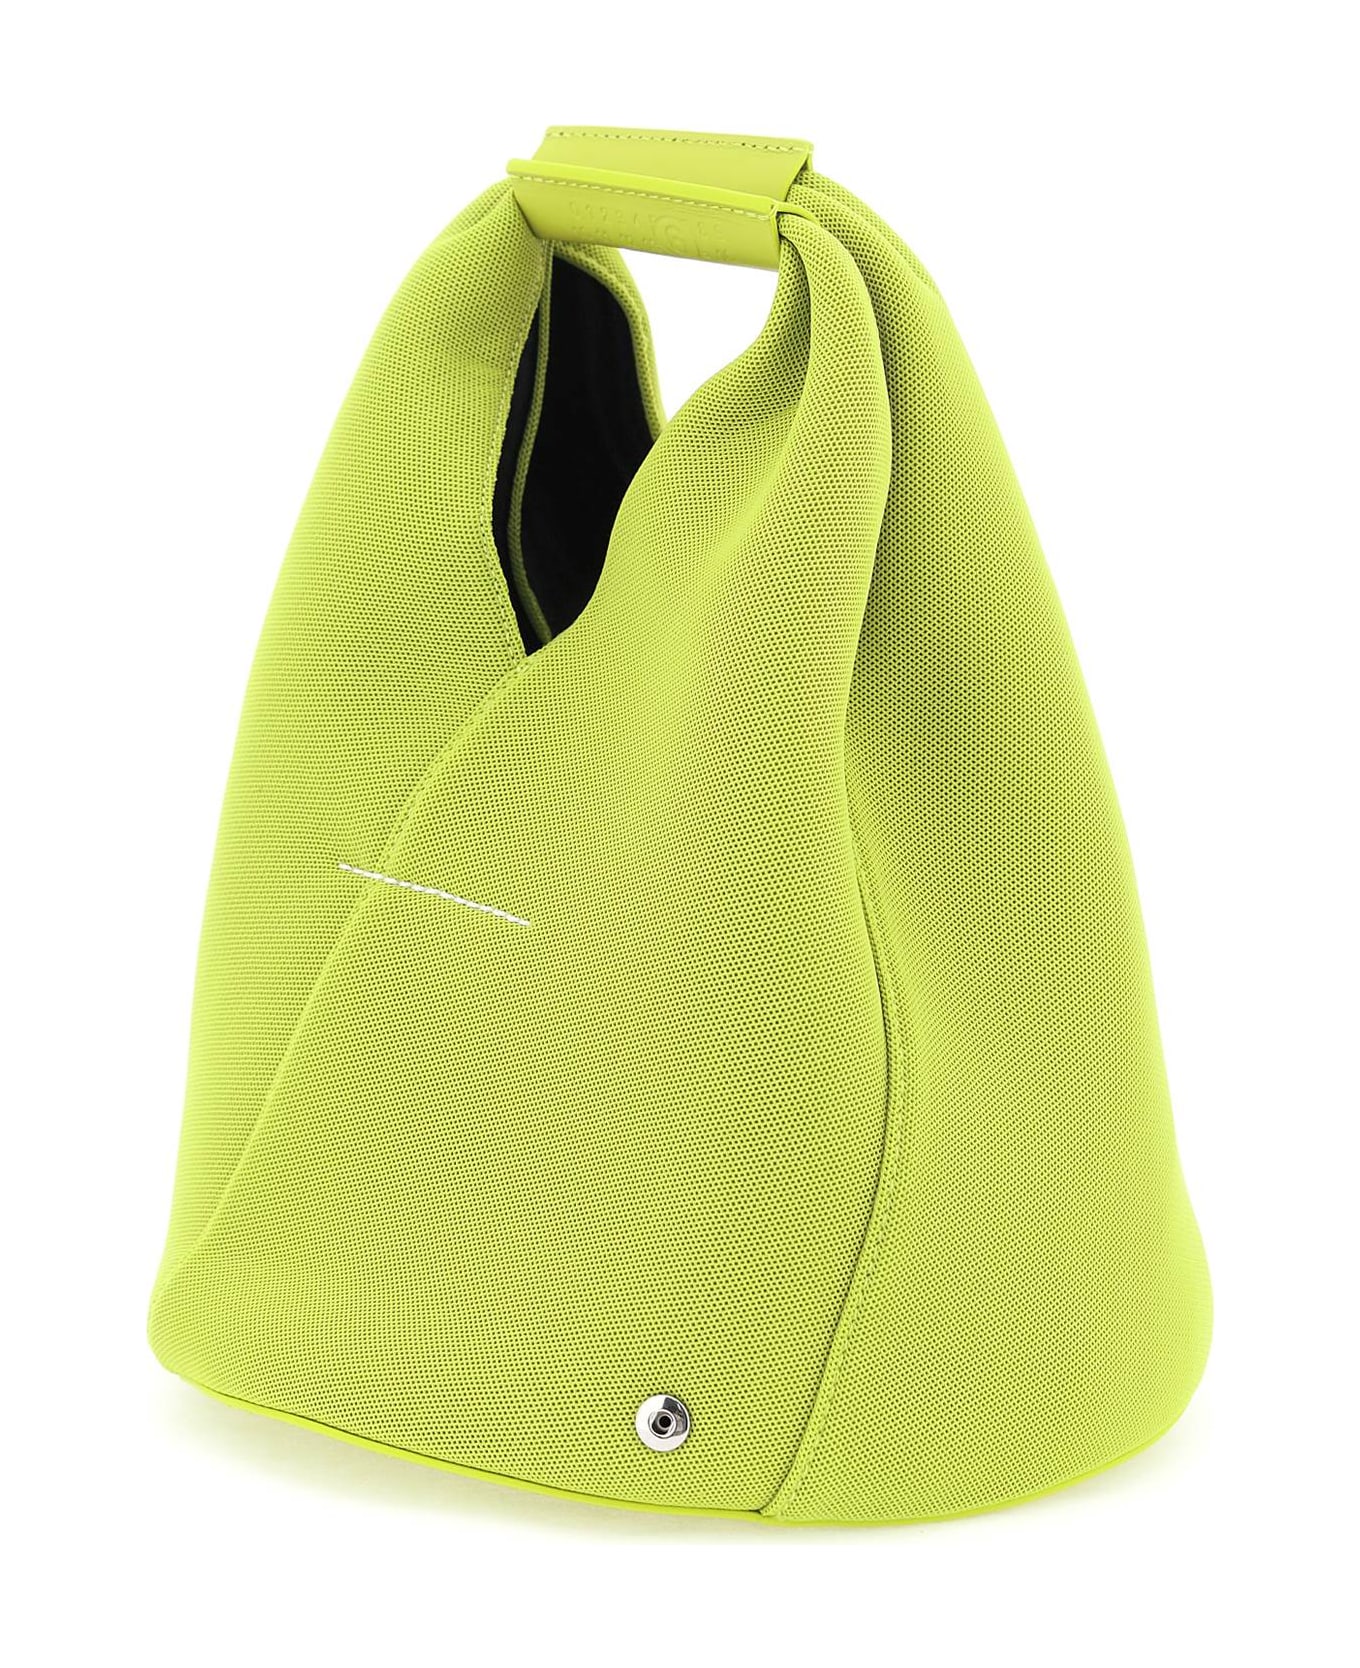 MM6 Maison Margiela Japanese Bucket Handbag - LIME GREEN (Green) トートバッグ